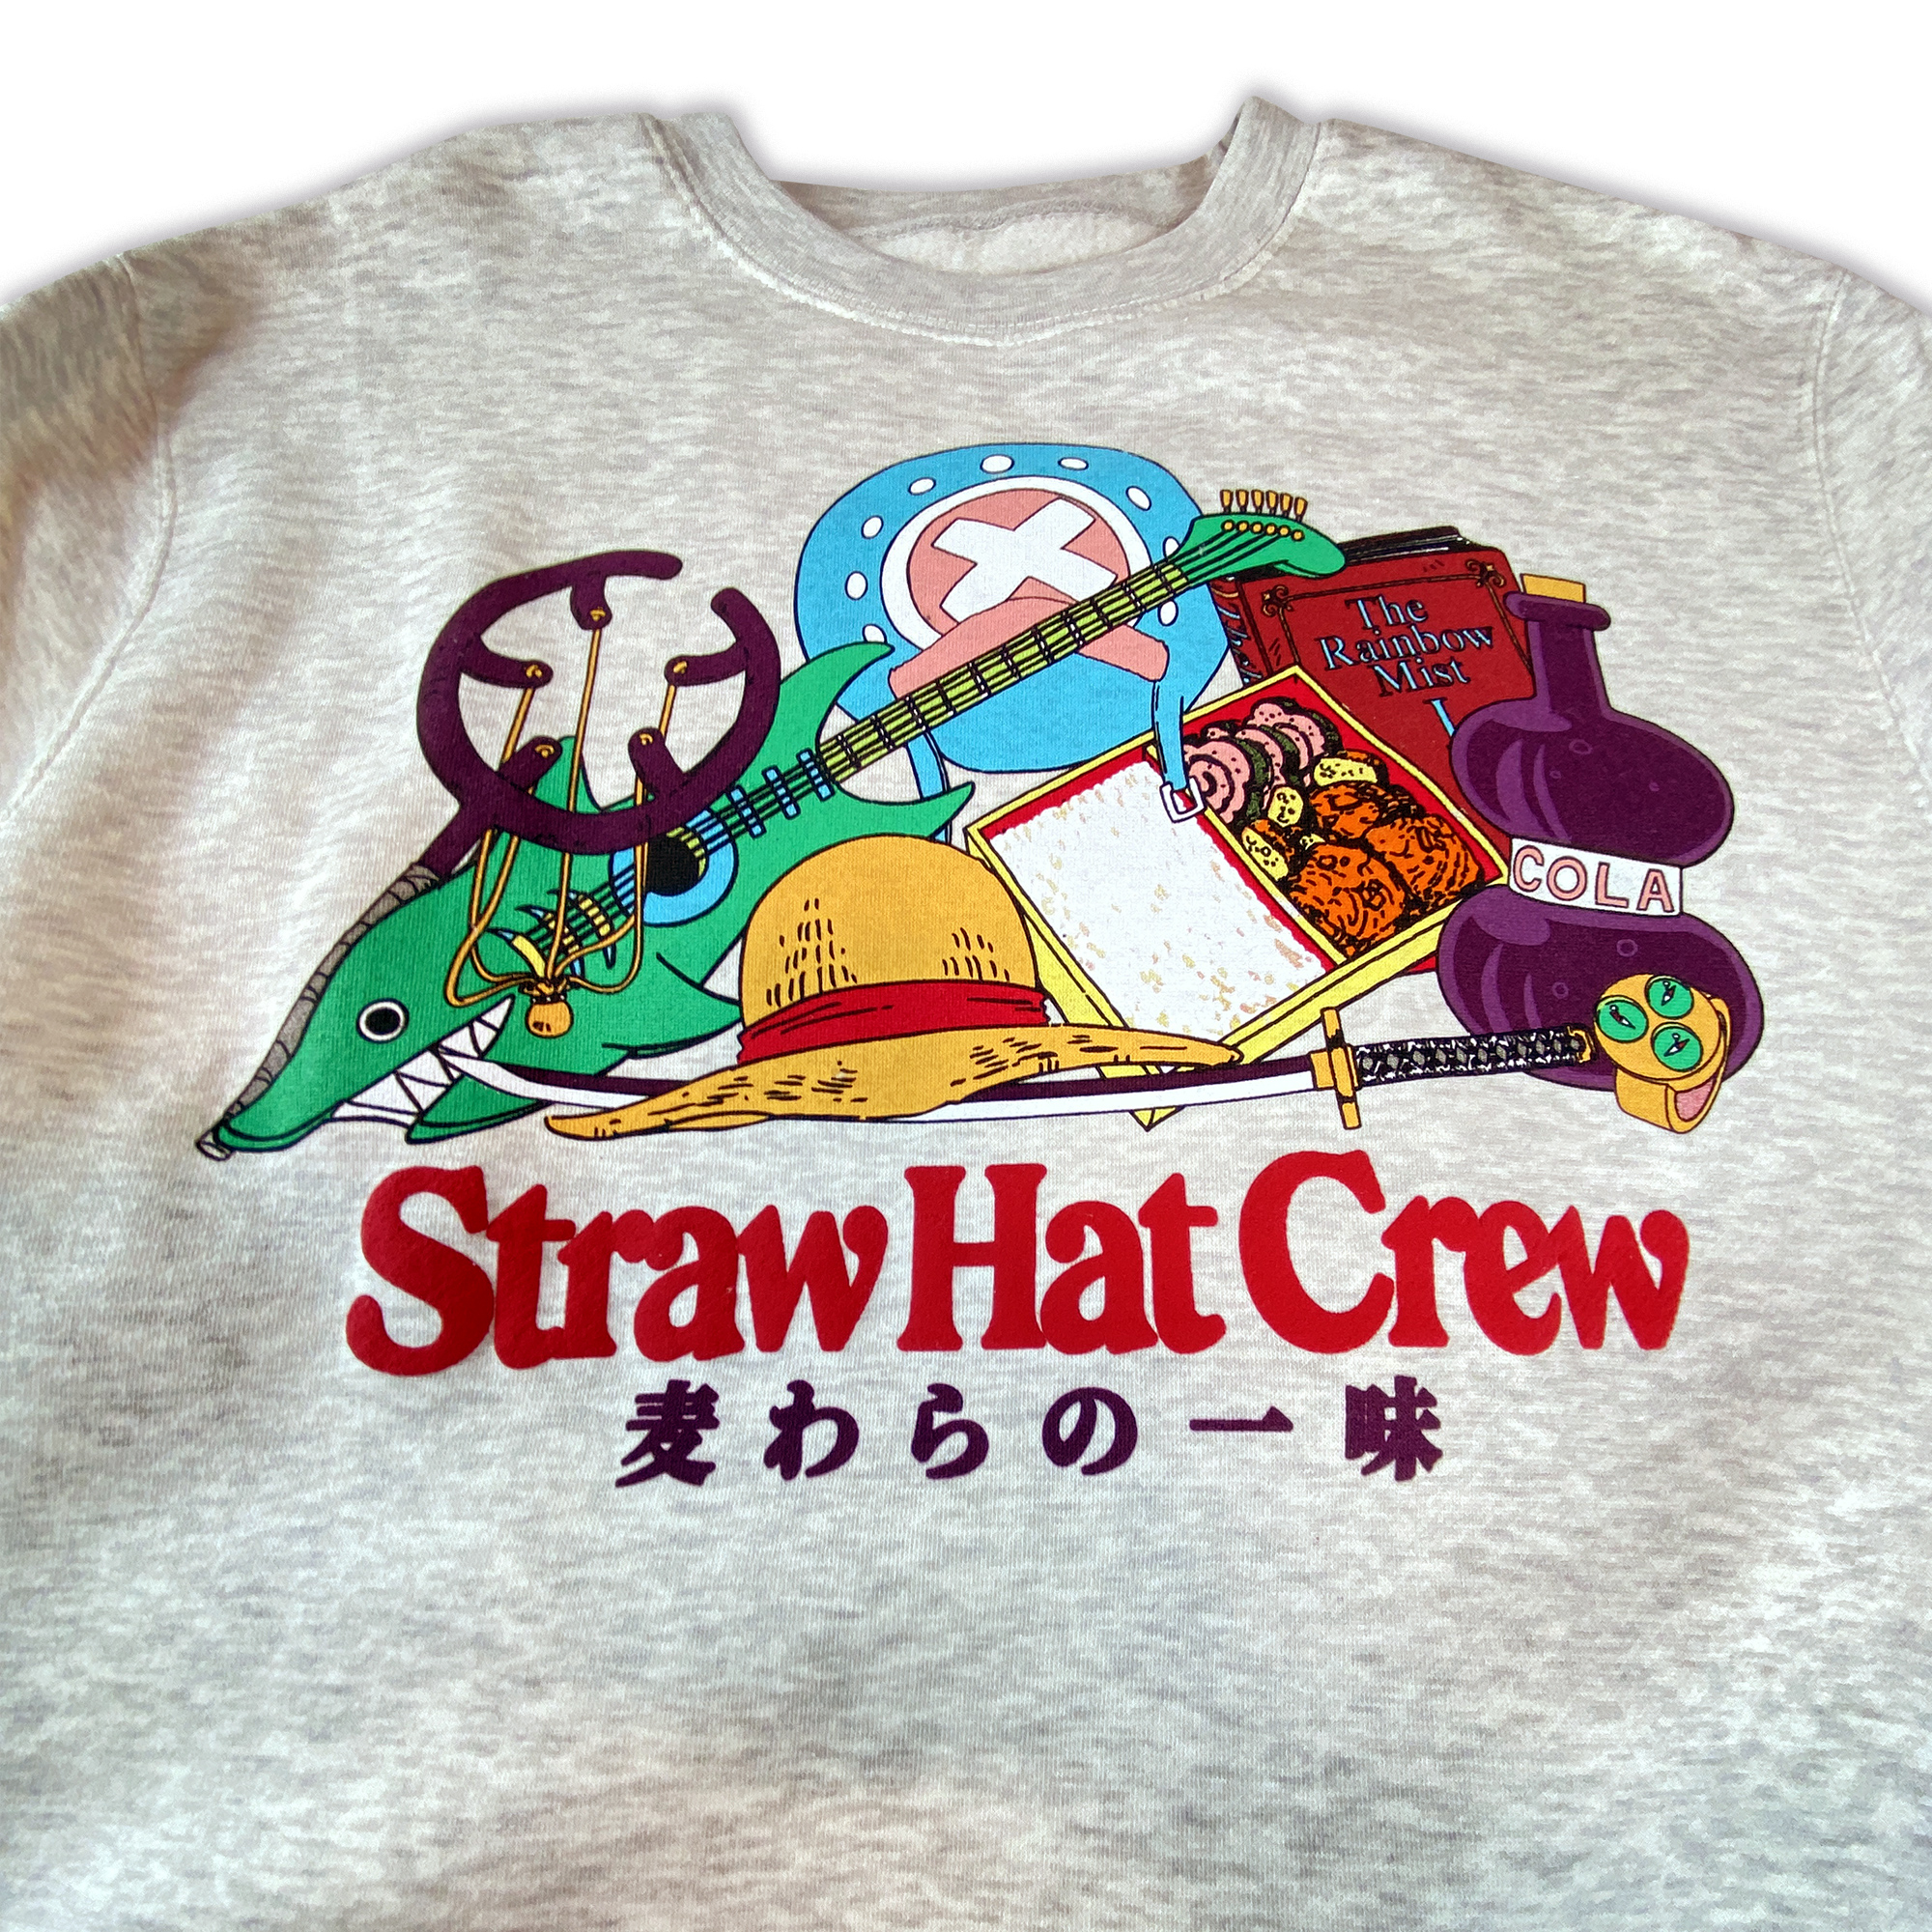 One Piece - Straw Hat Crew Icons Crew Sweatshirt - Crunchyroll Exclusive! image count 1